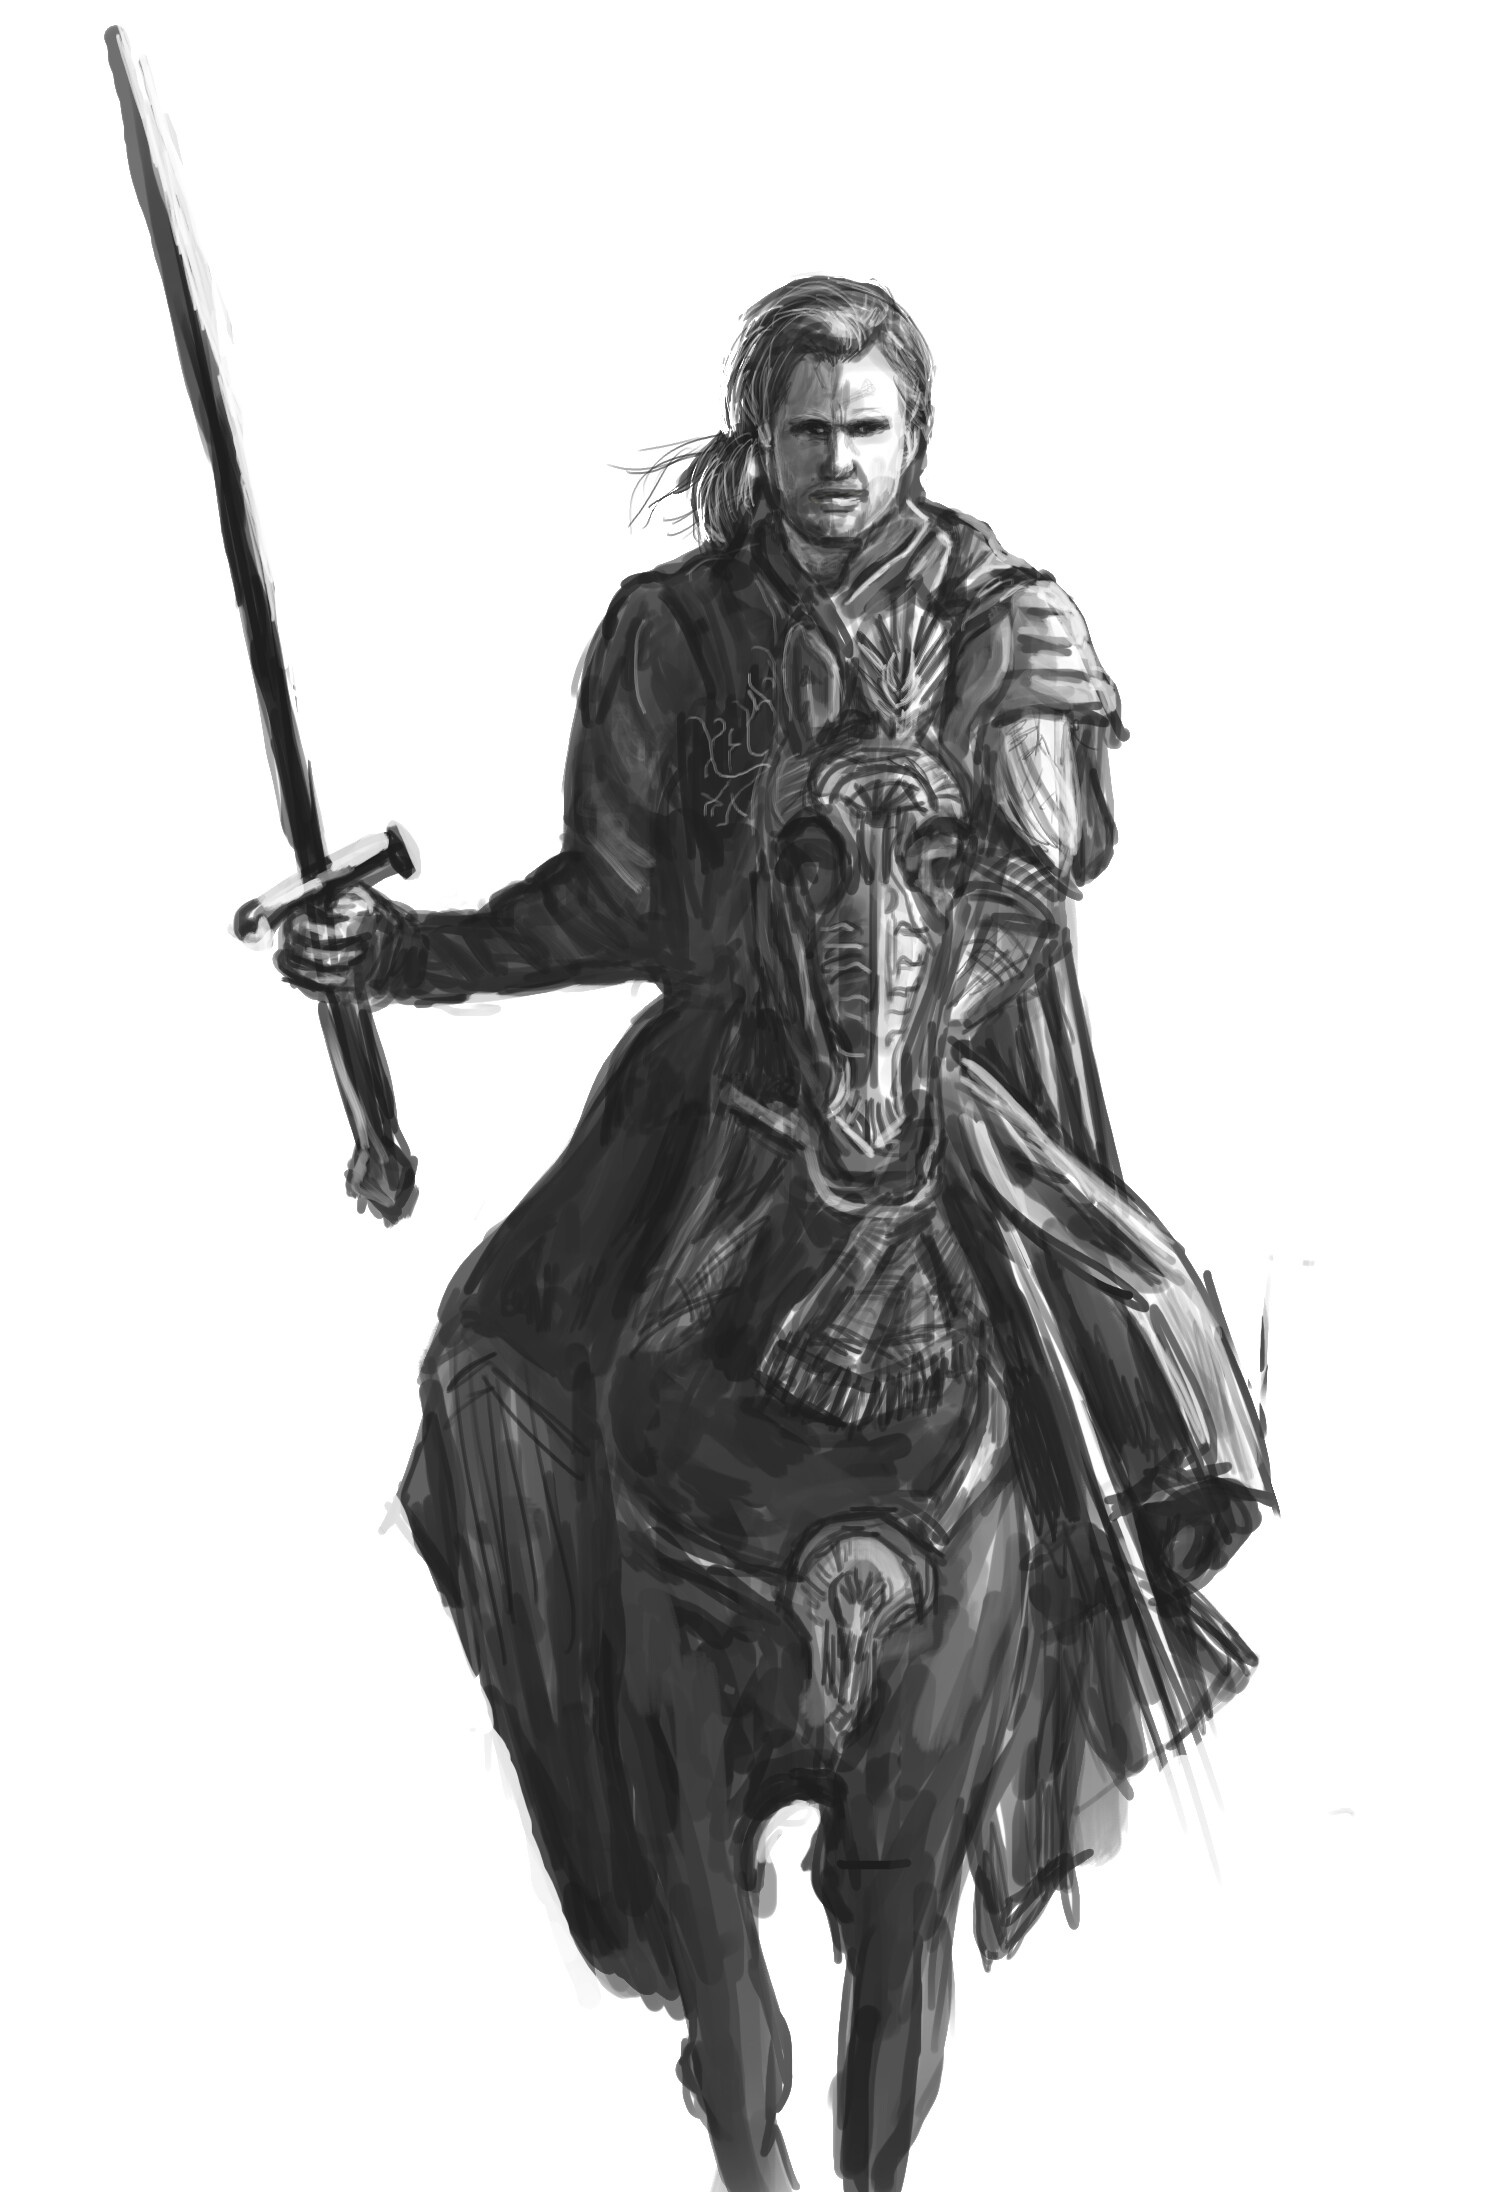 Oh look it's Aragorn by TheGreatandMightyOz on DeviantArt